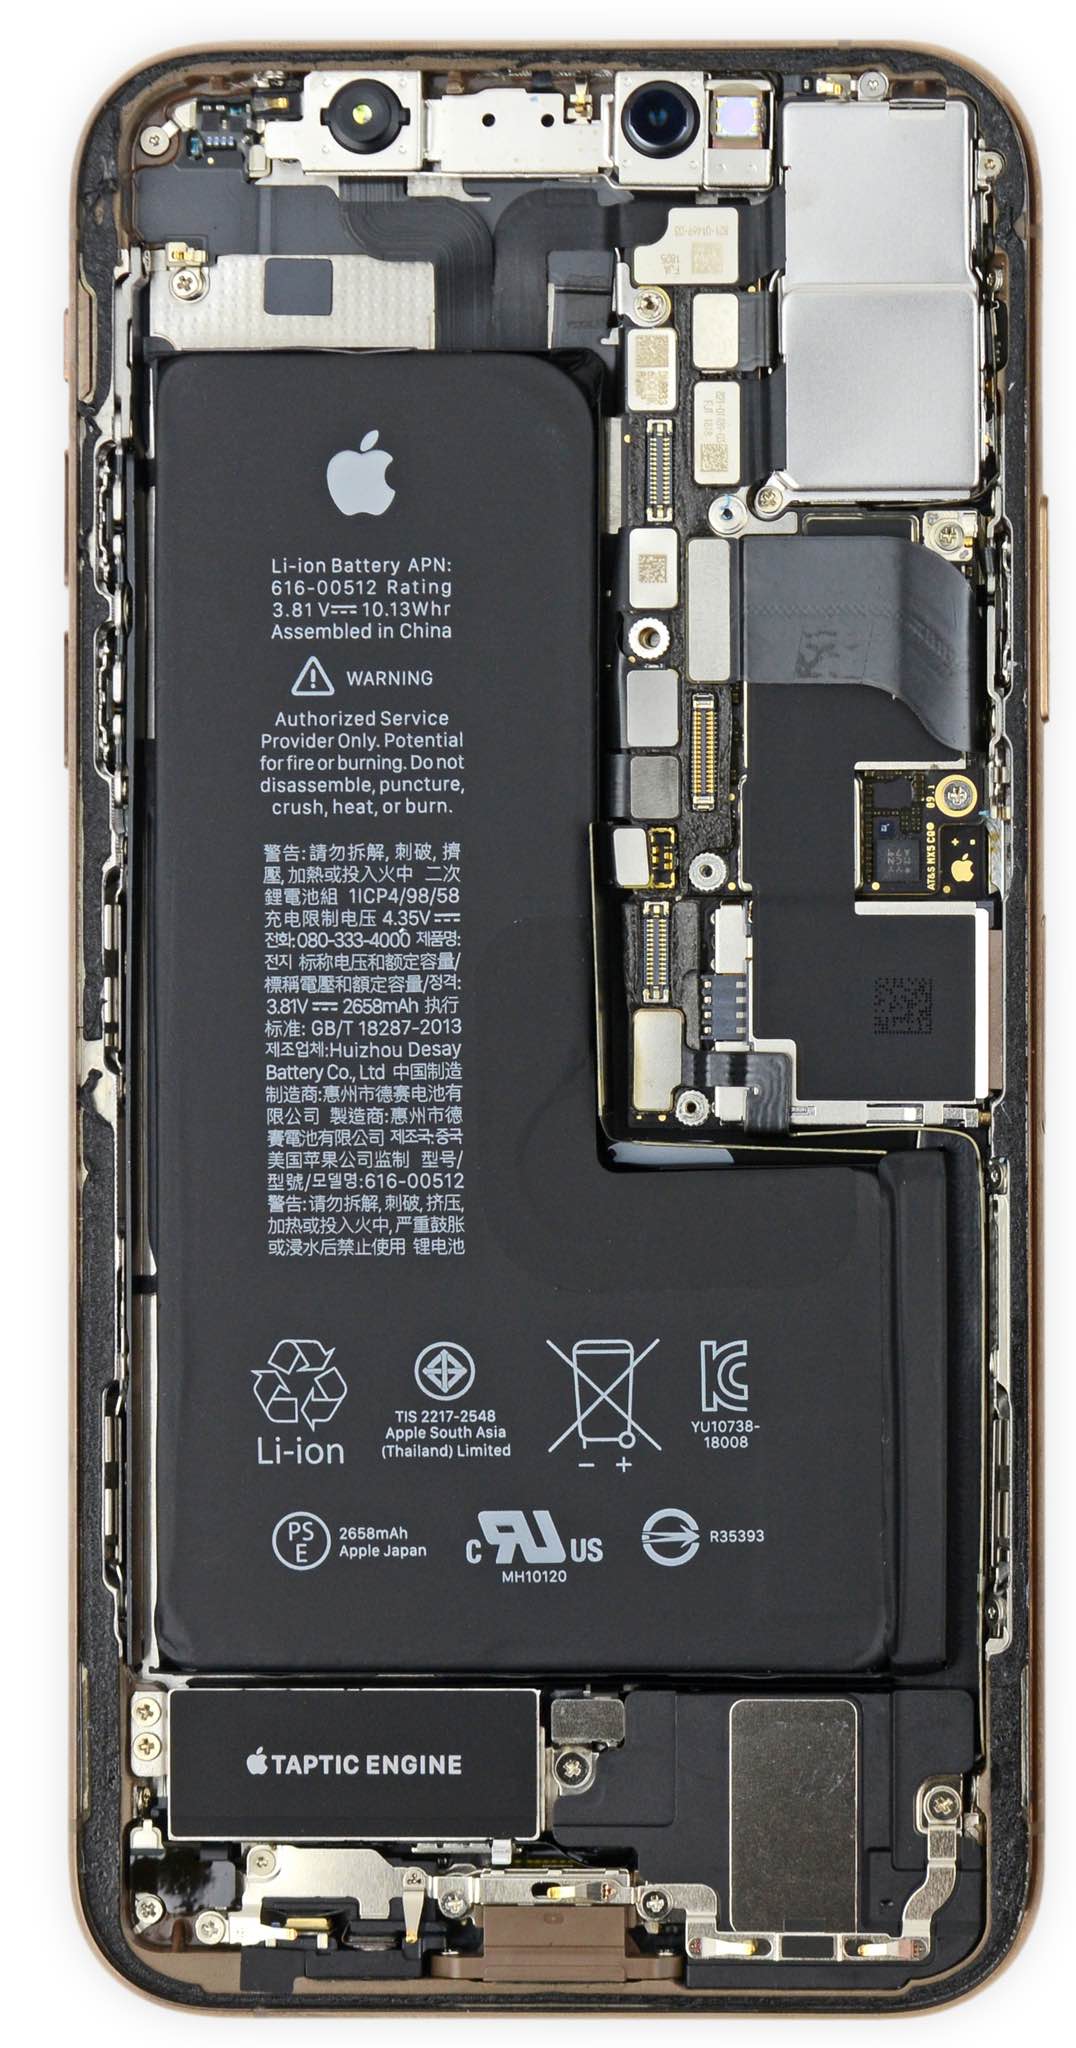 innerhalb des iphone wallpaper,technologie,computerkomponente,gadget,batterie